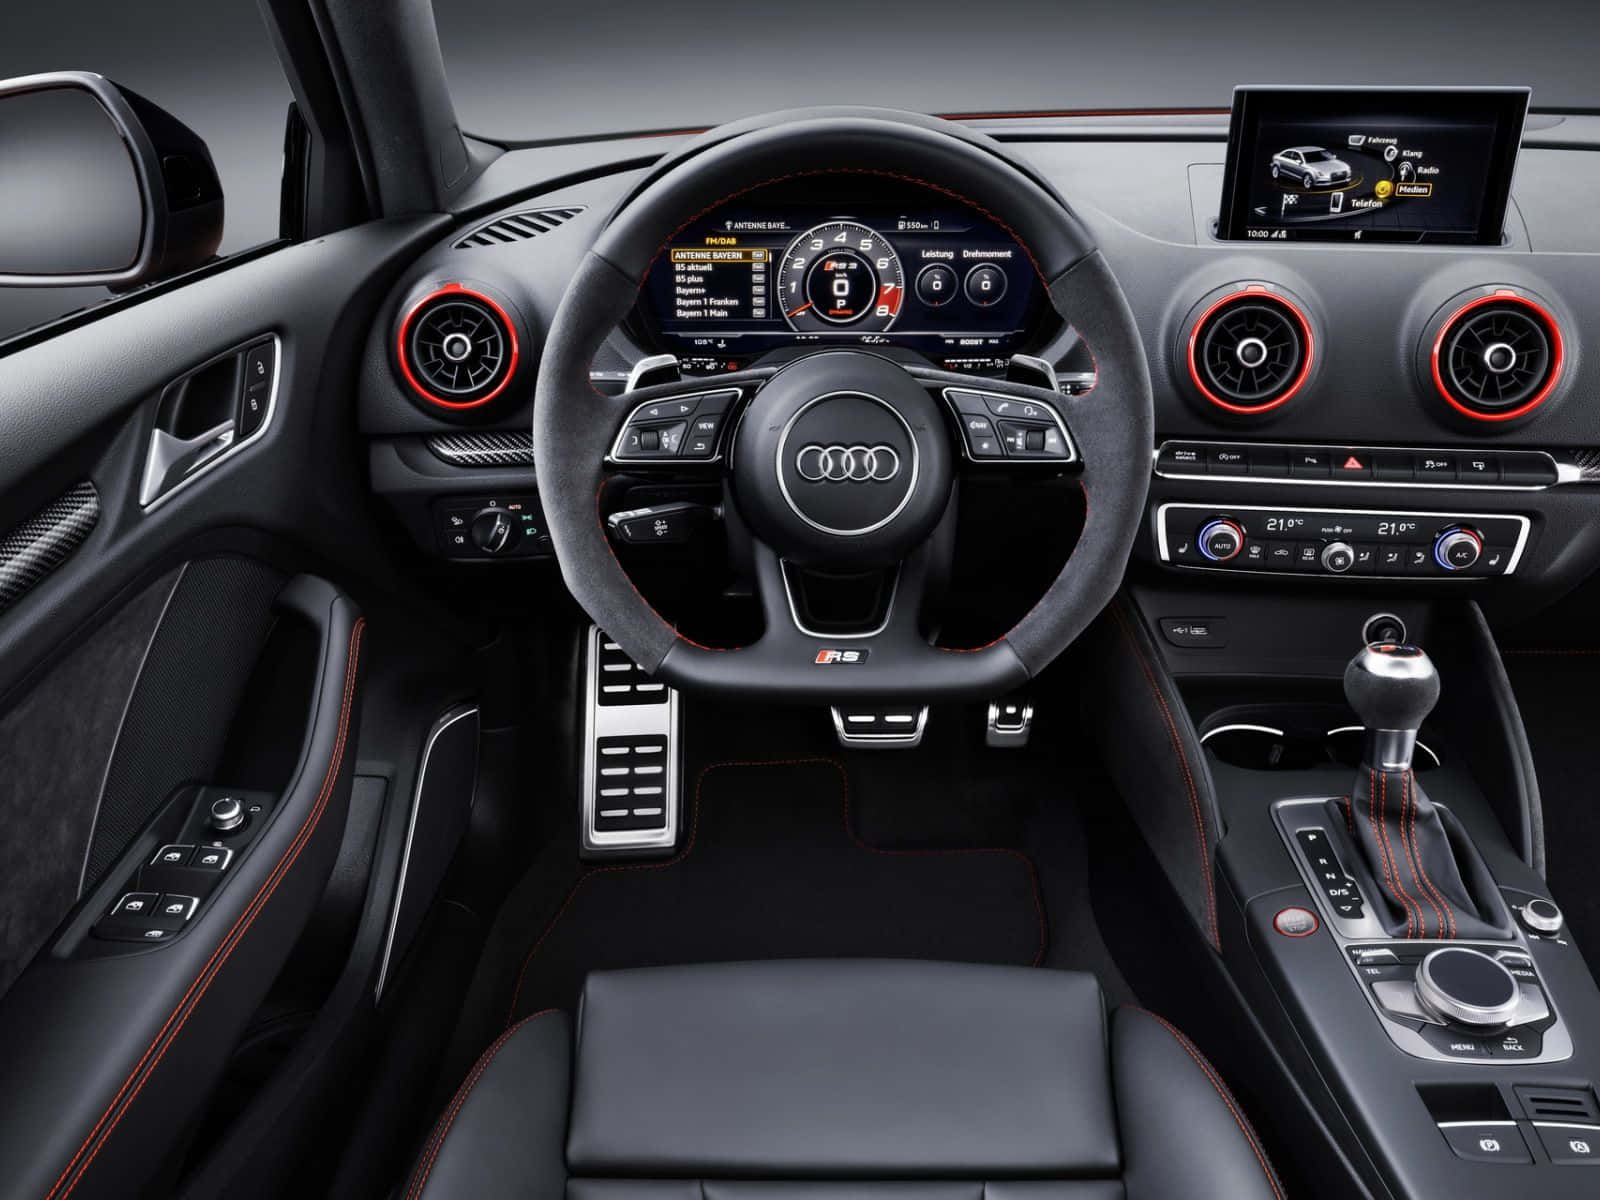 Rendimientopoderoso Desatado - El Audi Rs3 Fondo de pantalla